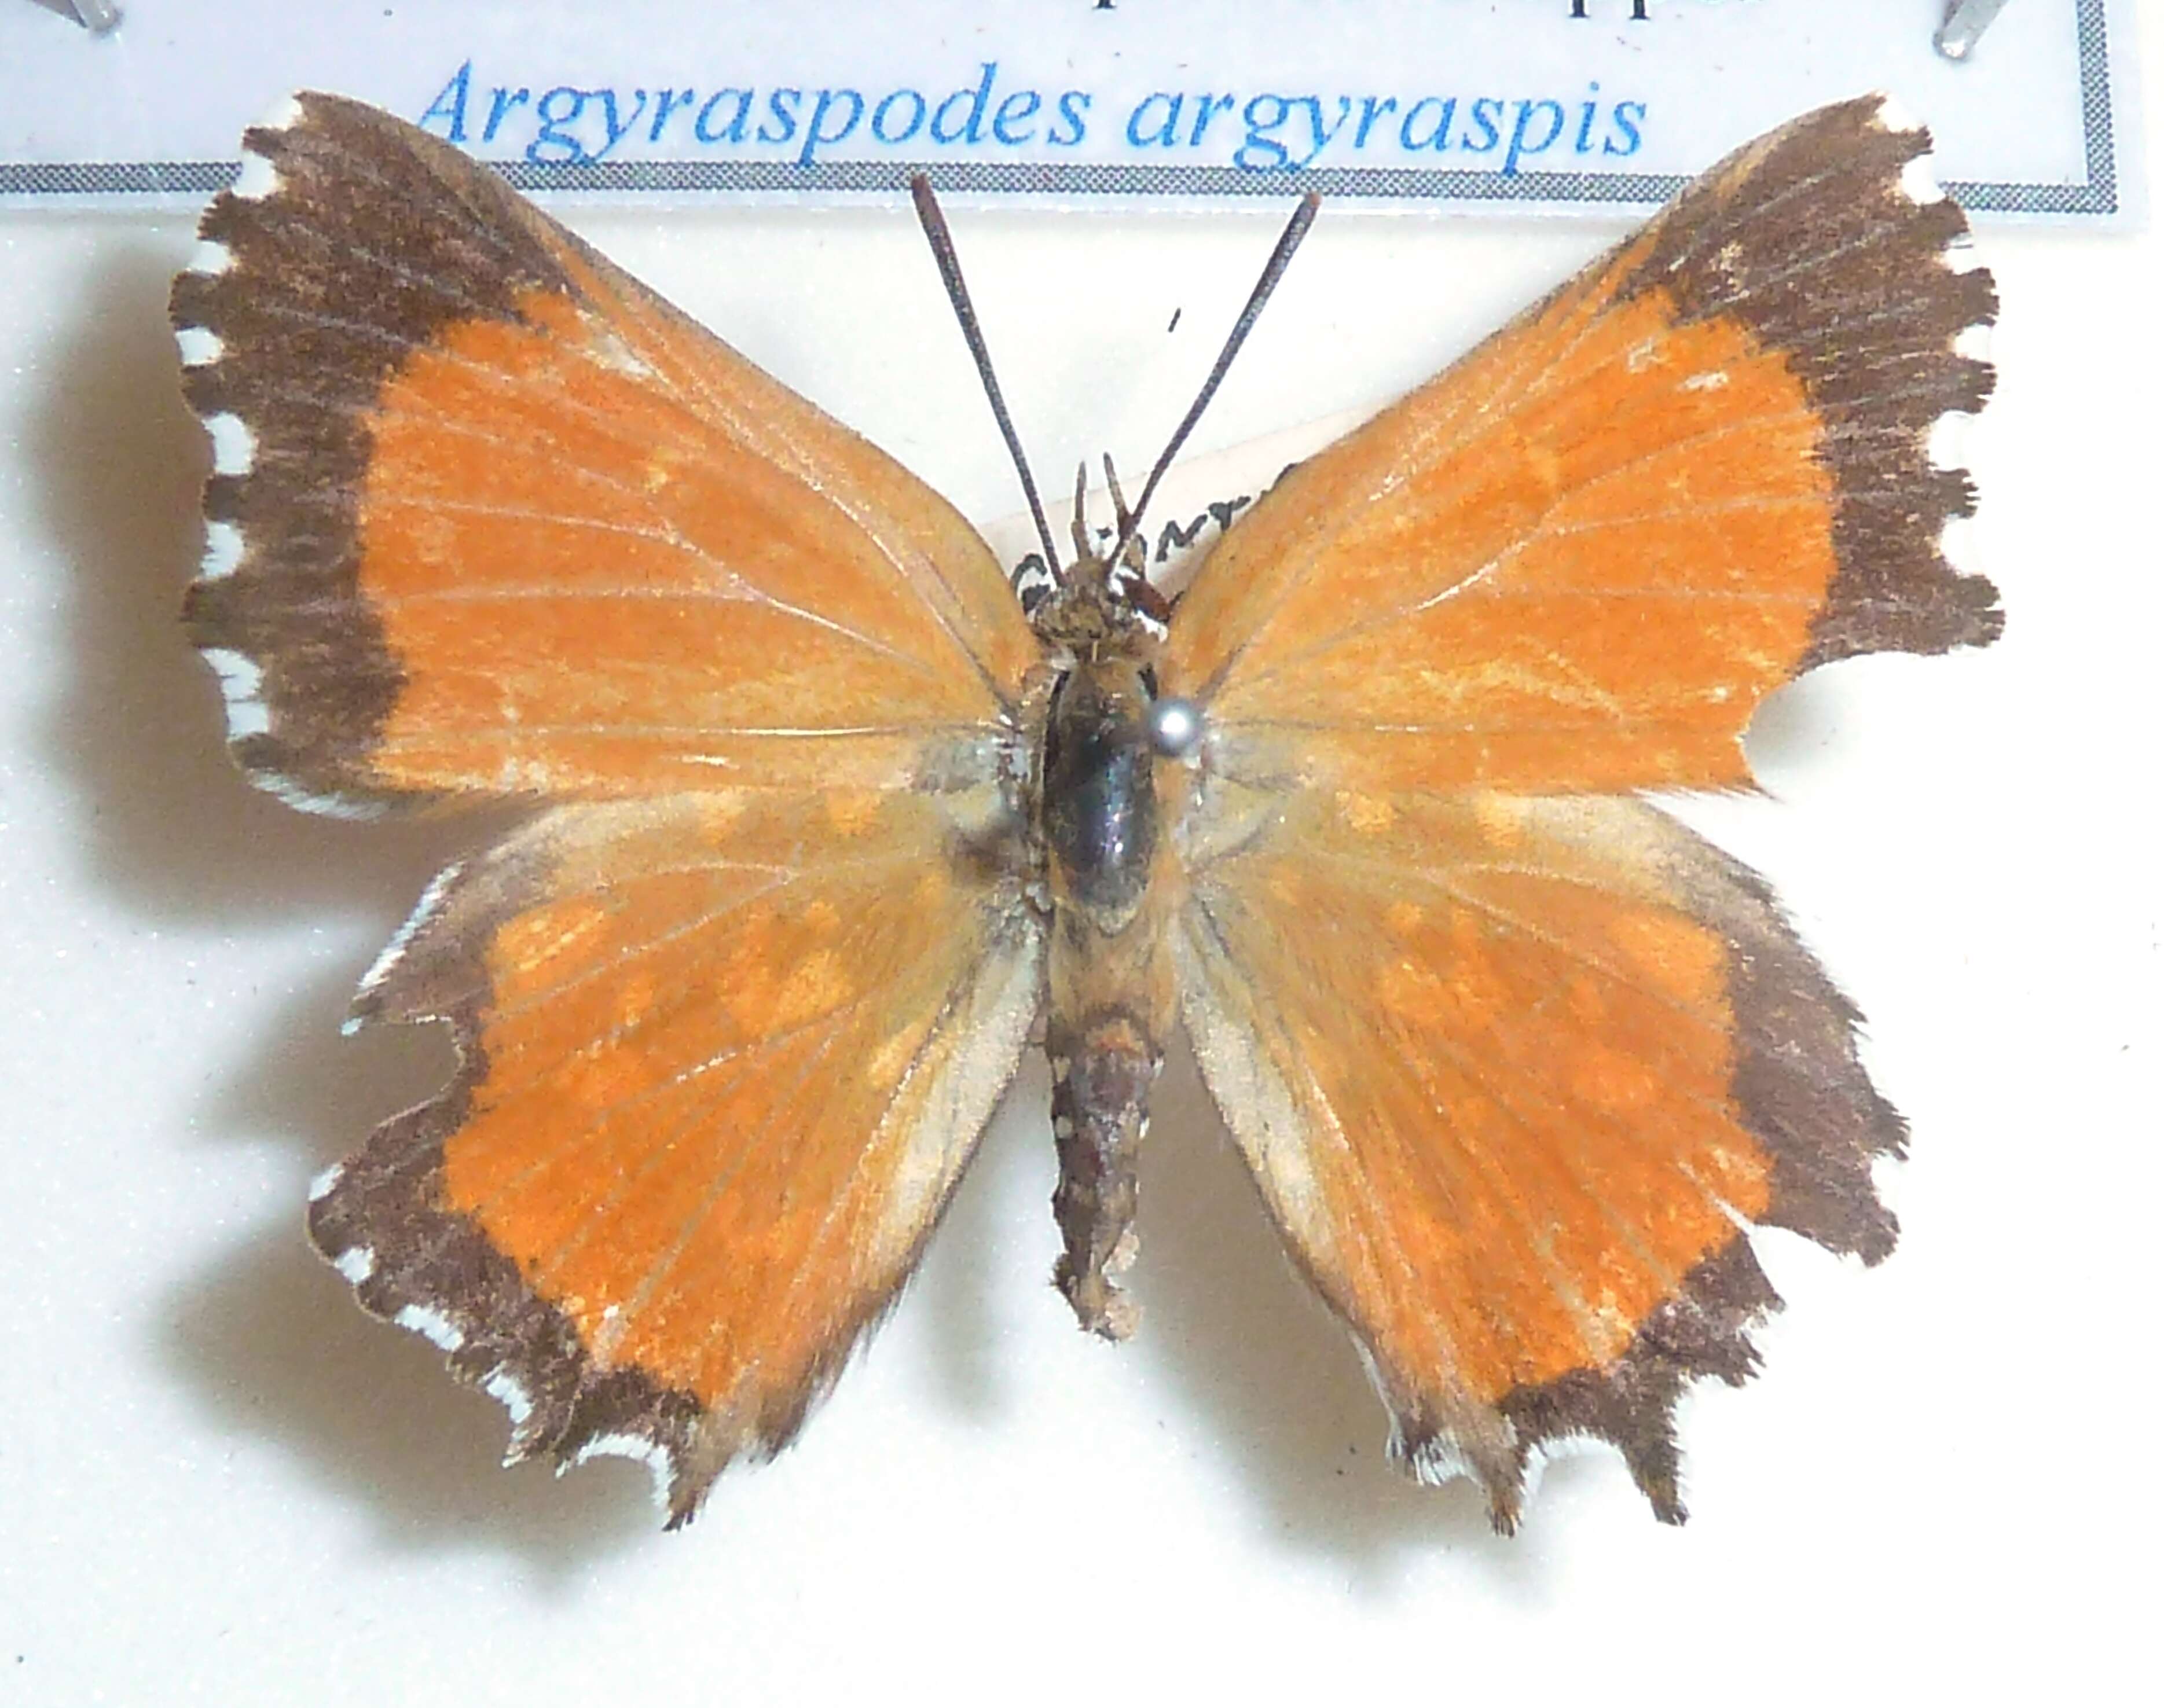 Image of Argyraspodes argyraspis (Trimen 1873)